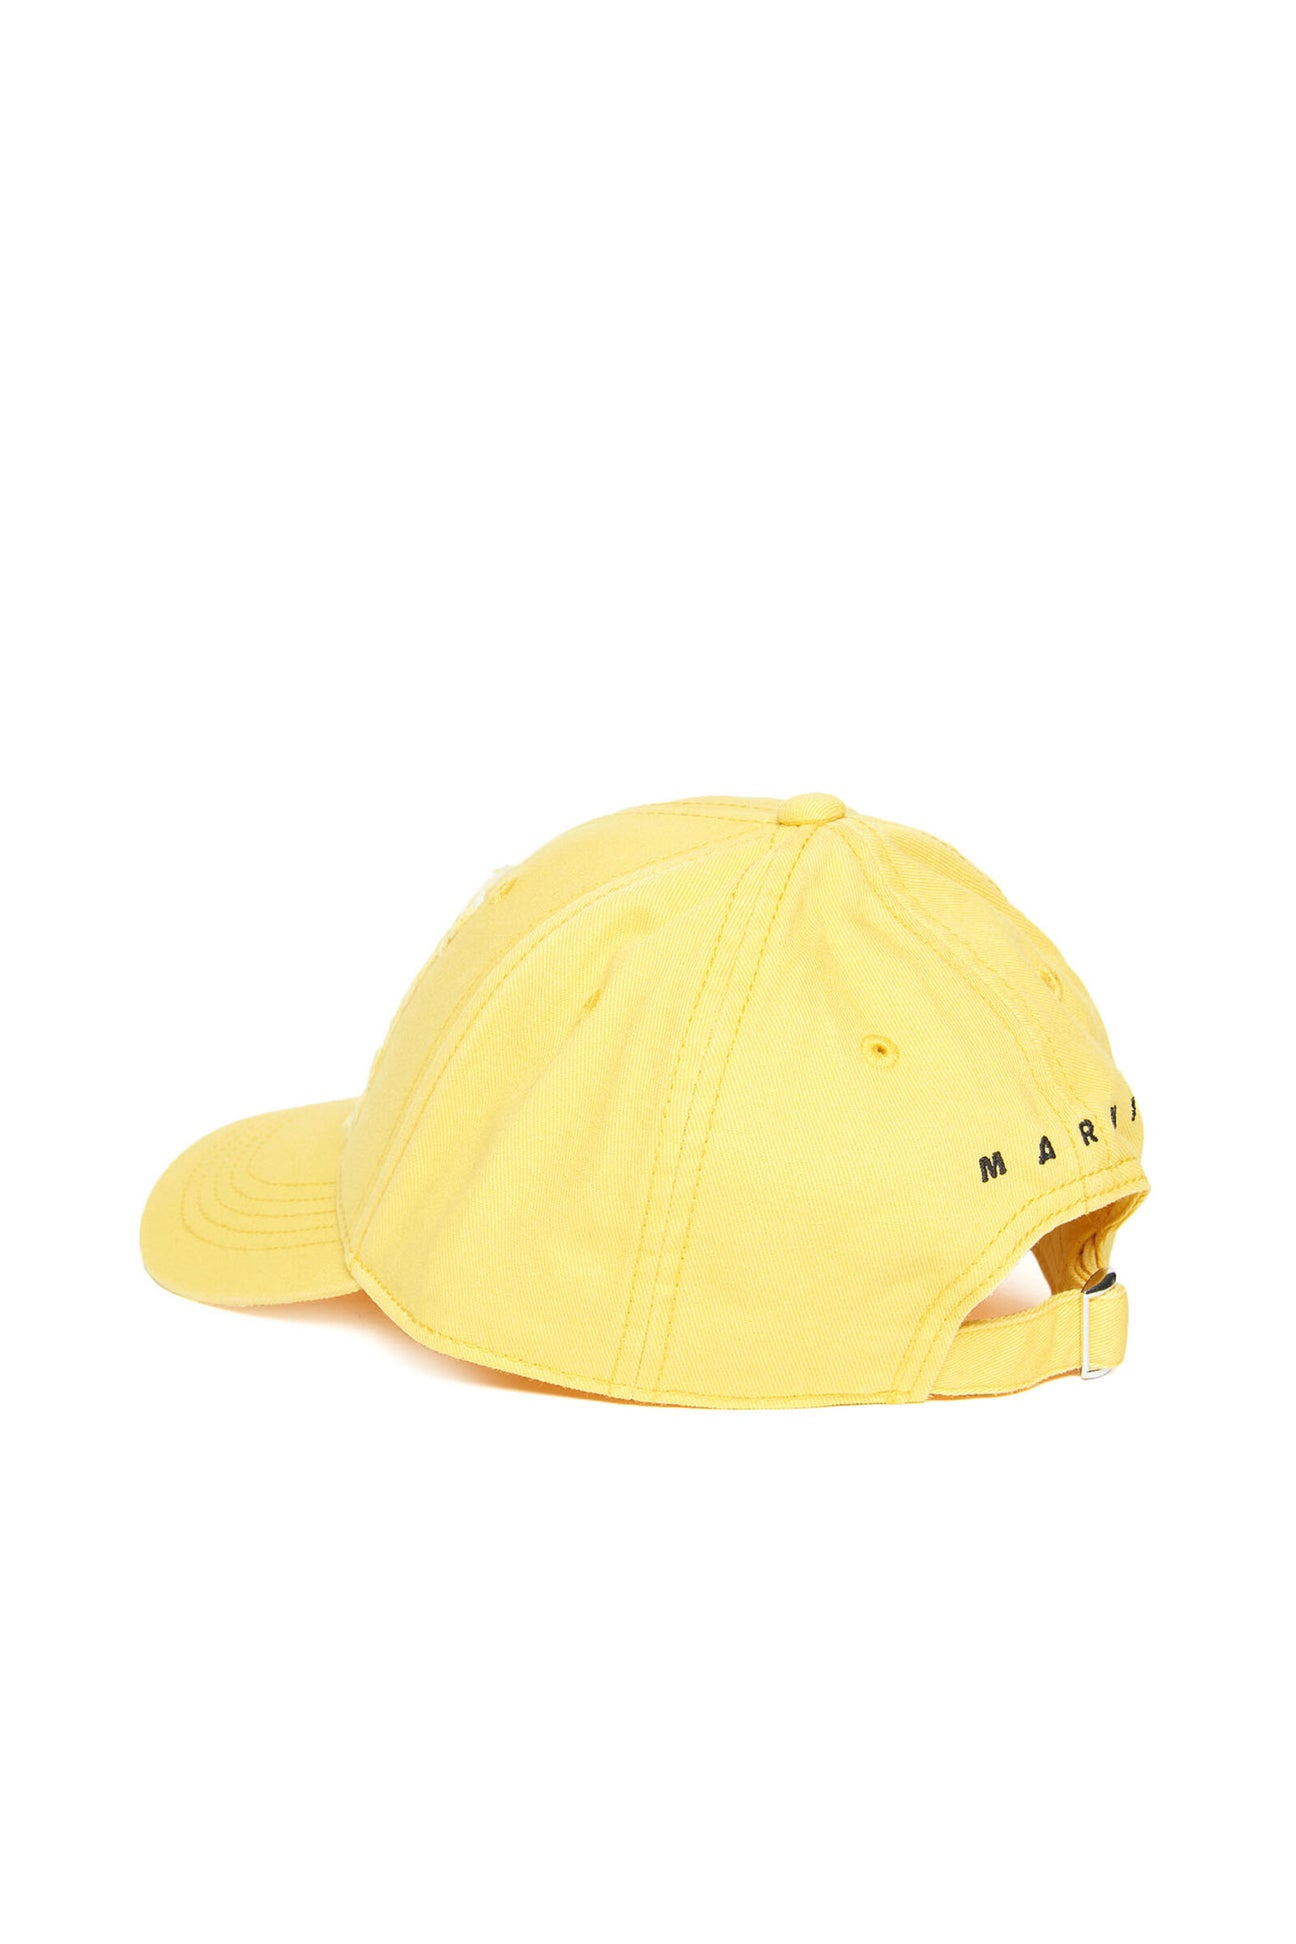 Yellow baseball cap with Big M logo Yellow baseball cap with Big M logo